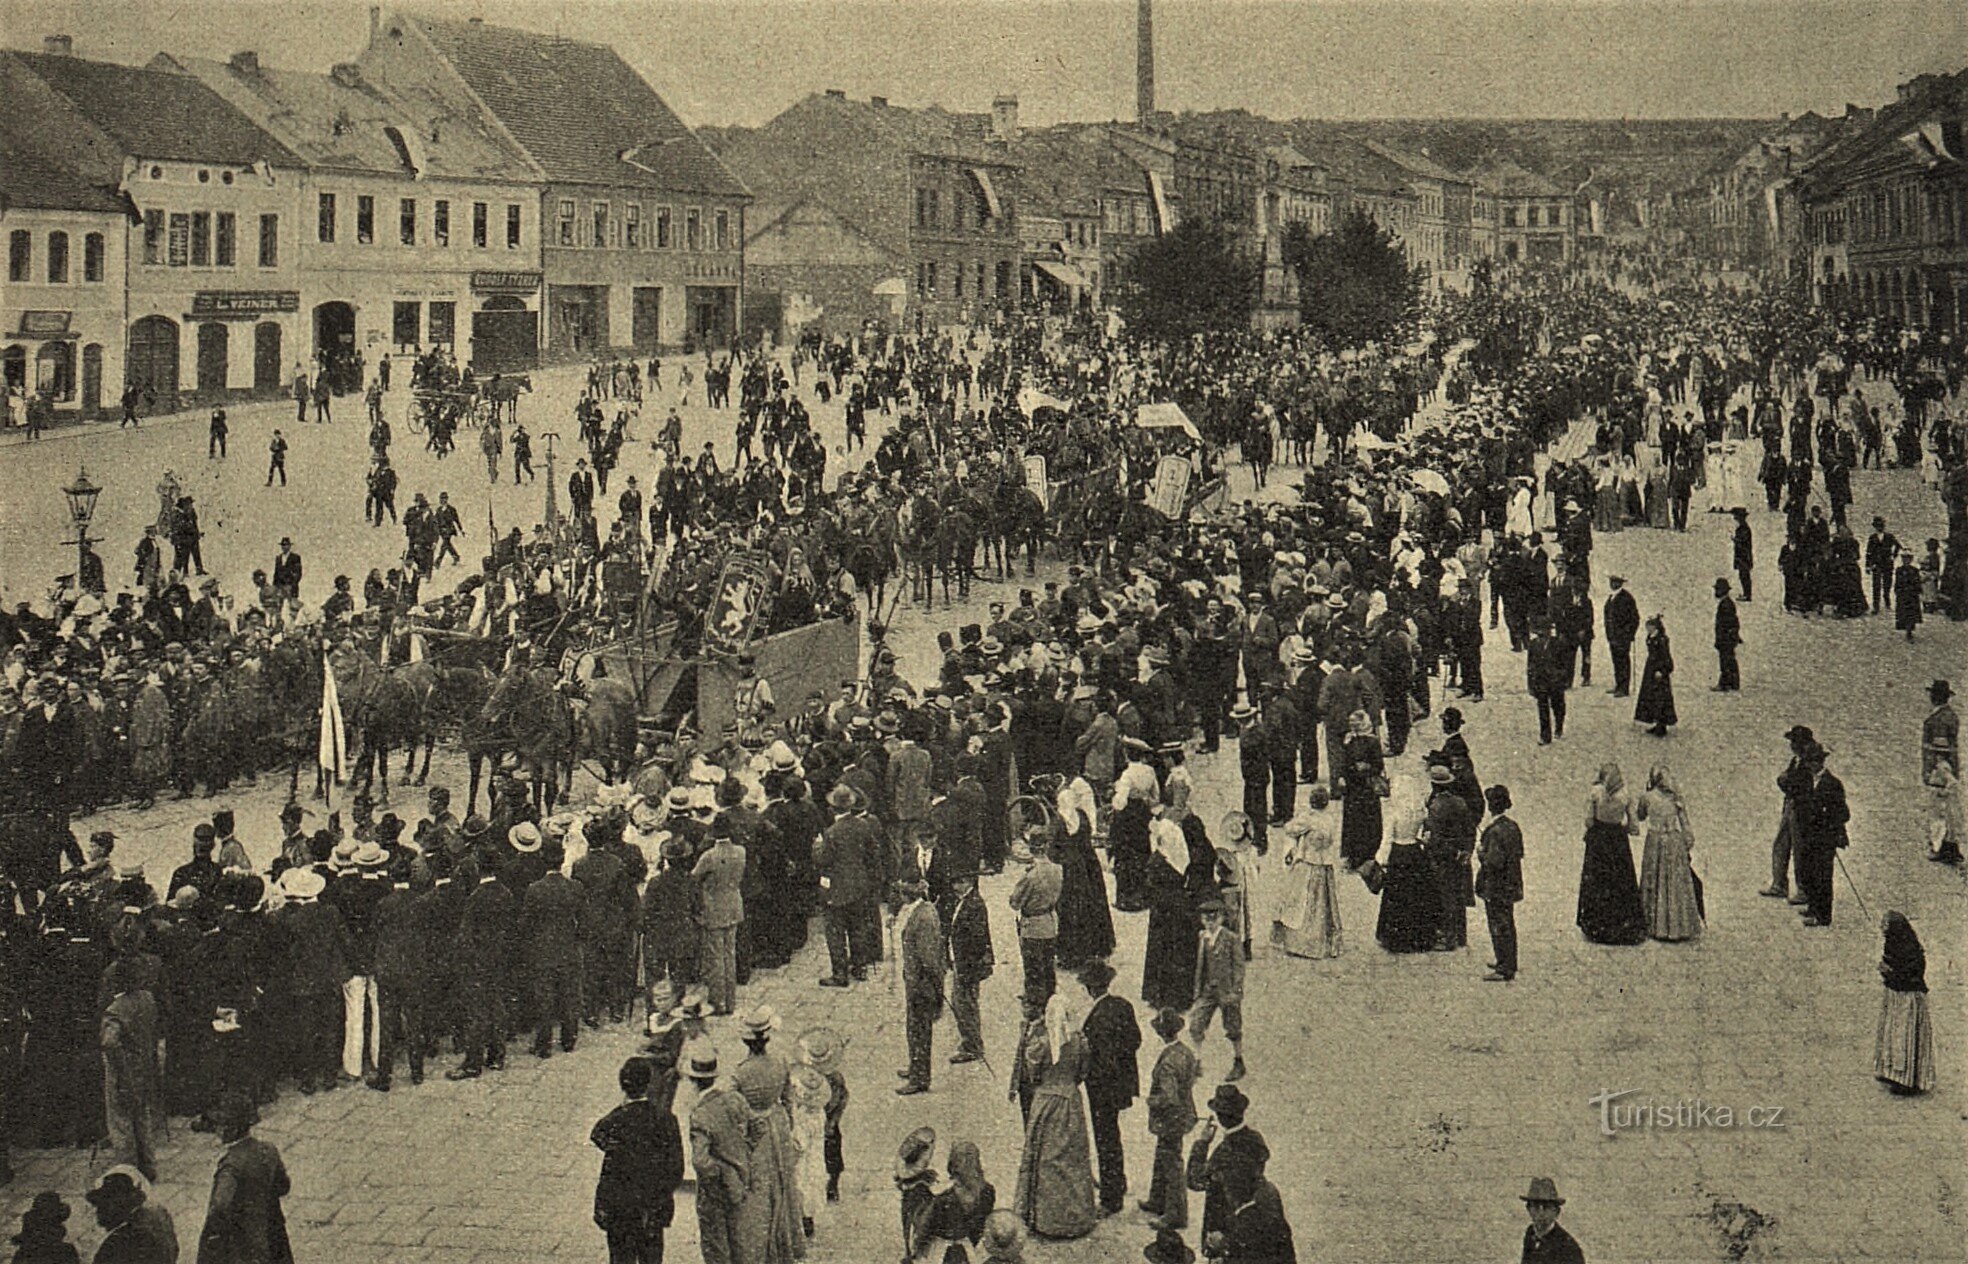 Huszita ünnepség Hořicében 1903-ban